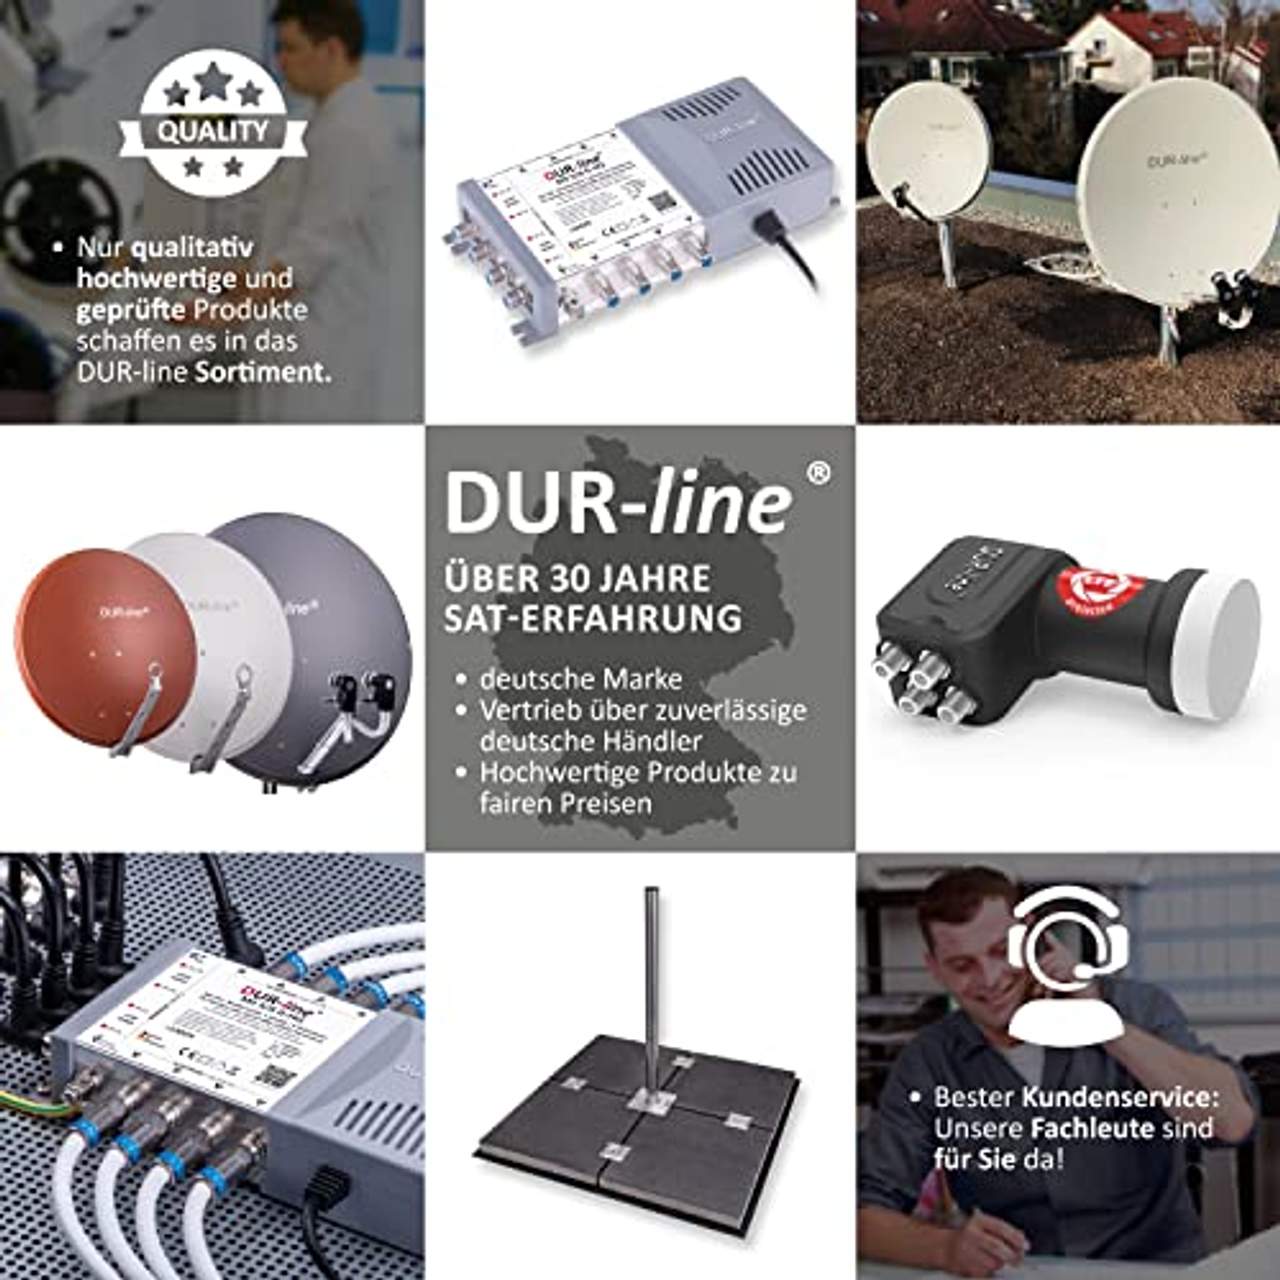 DUR-line Select 85cm x 90cm Alu Satelliten-Schüssel Rot